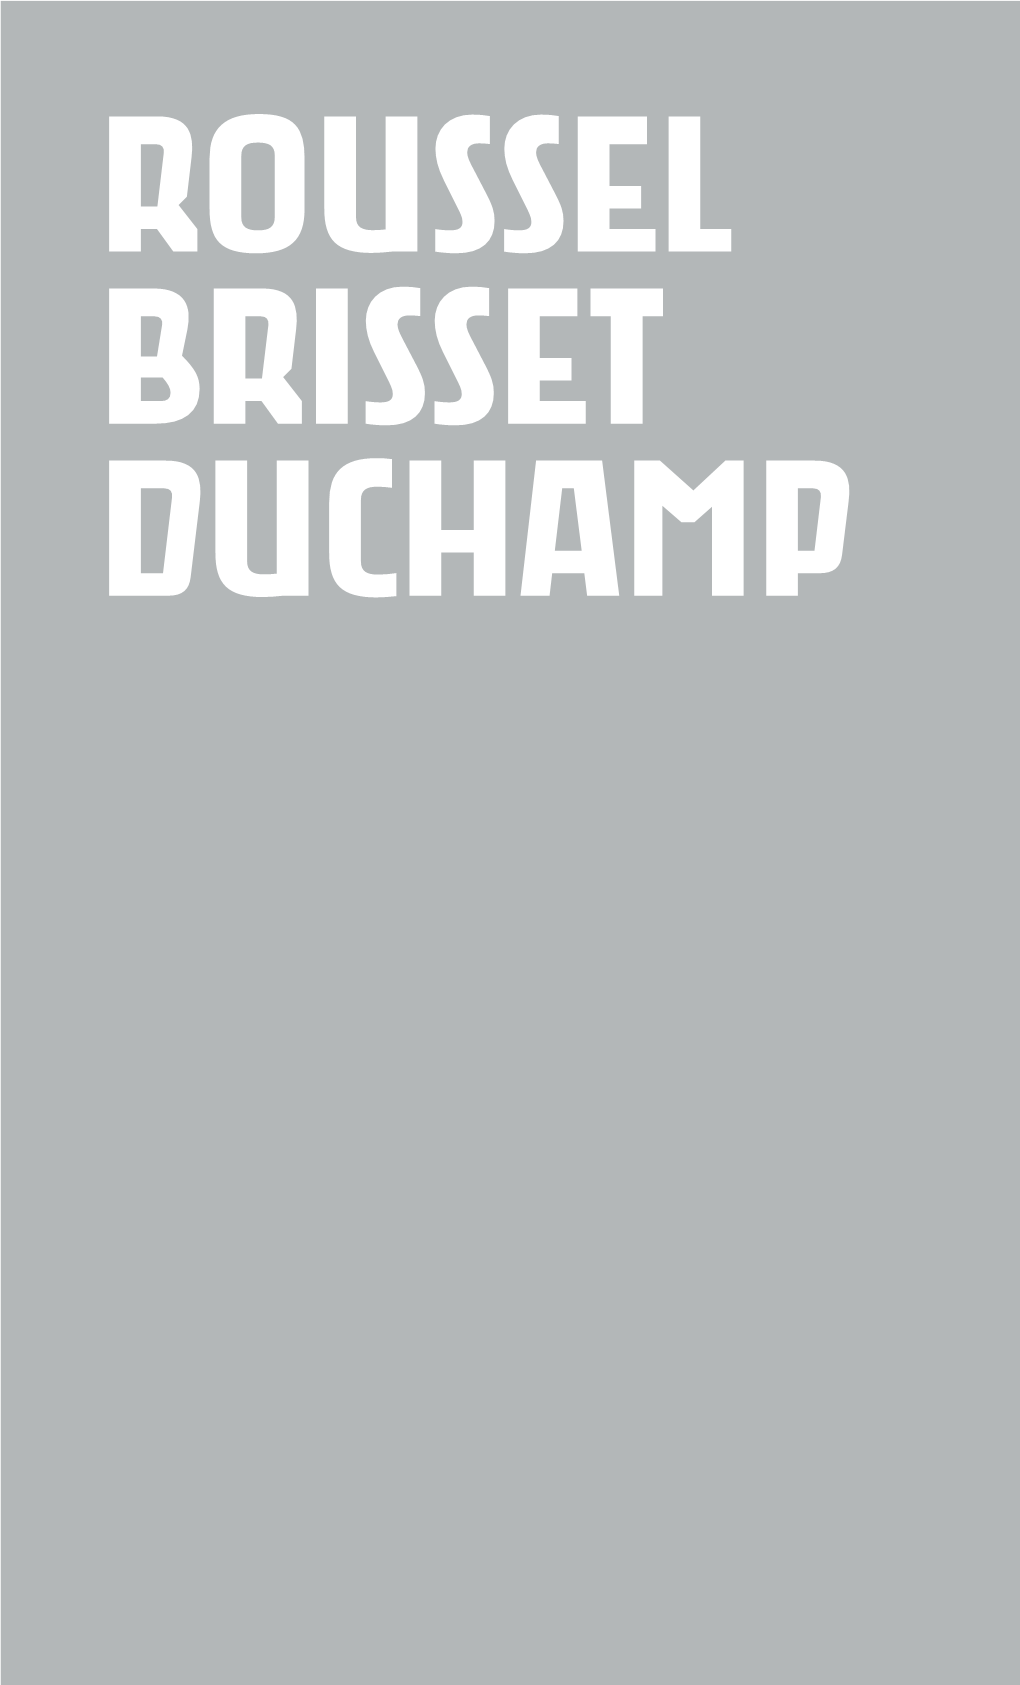 Roussel Brisset Duchamp